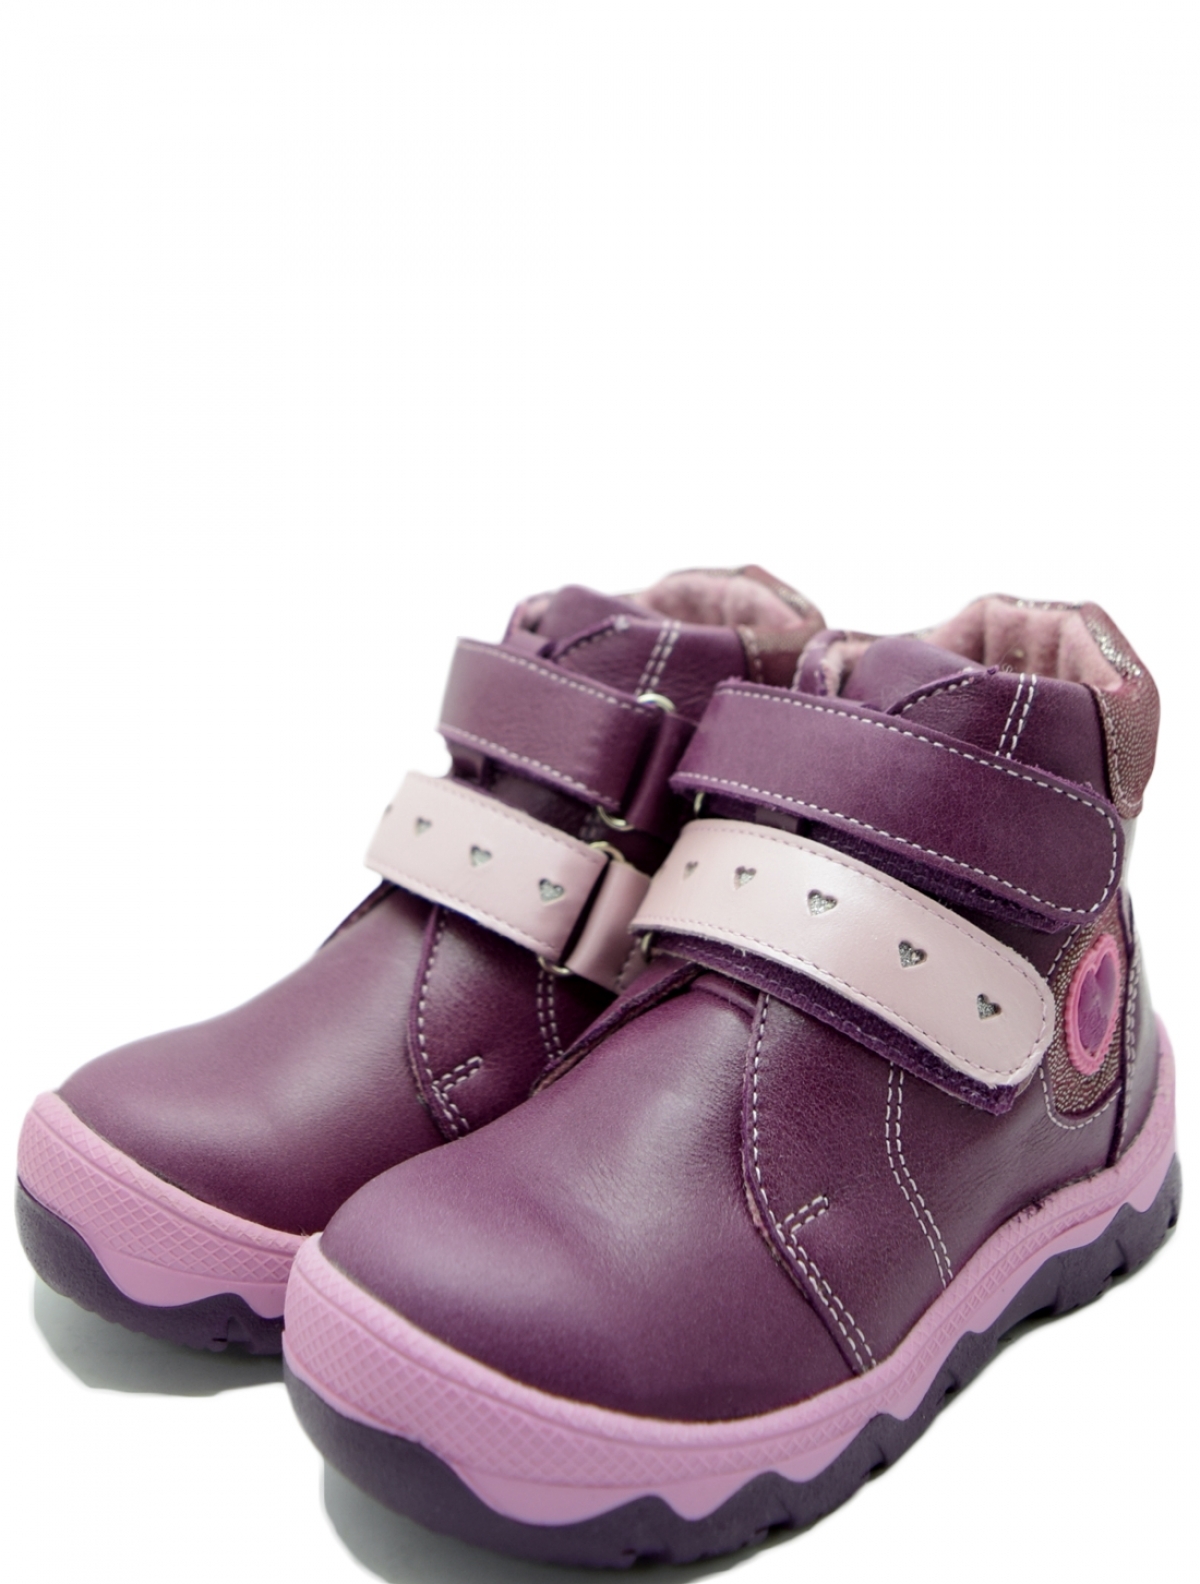 Shagovita 25168 ботинки для девочки